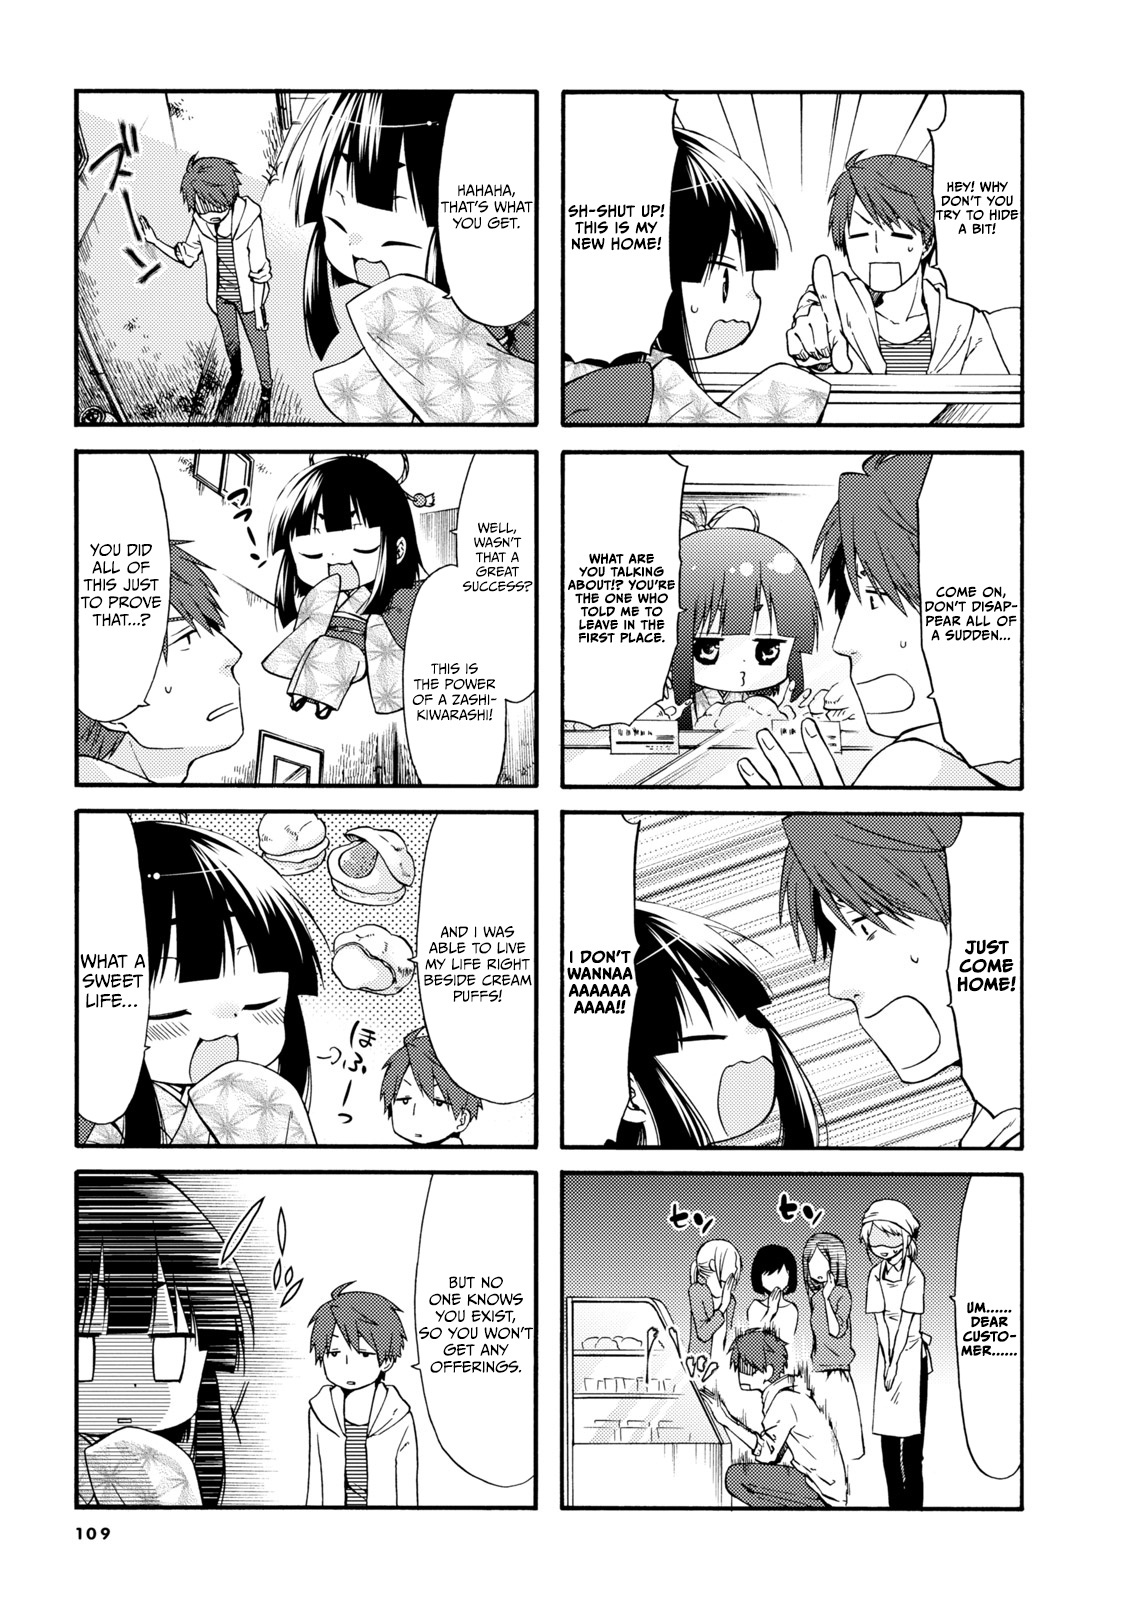 A Zashikiwarashi Lives In That Apartment - Page 3